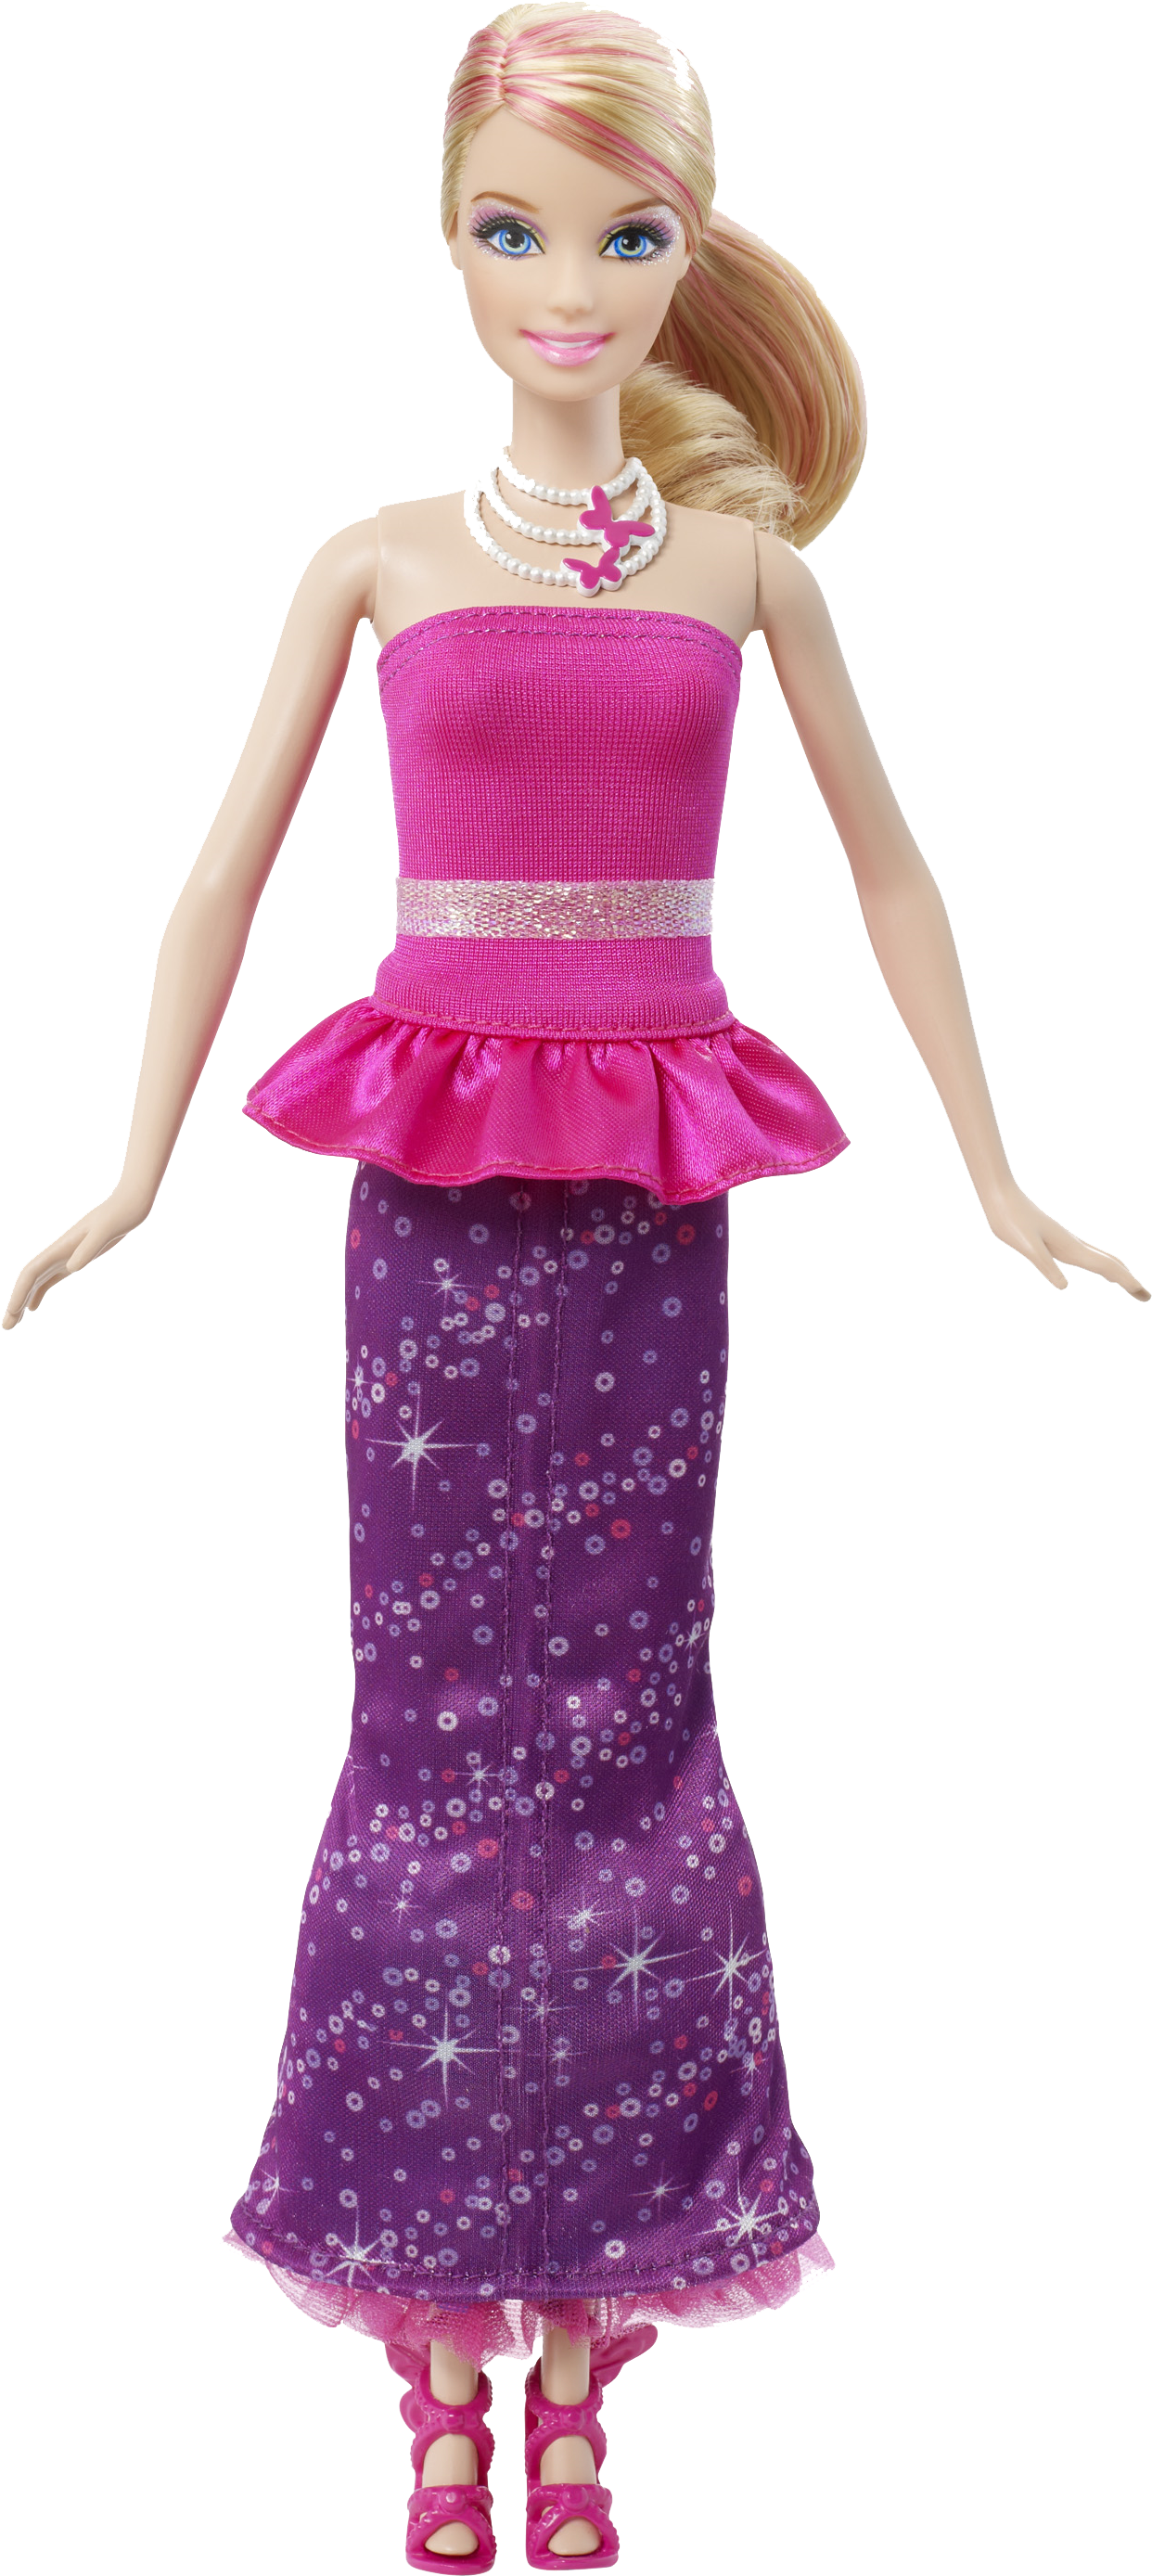 Barbie Doll Free Download Png - Barbie Doll Transparent Background (1526x3000), Png Download